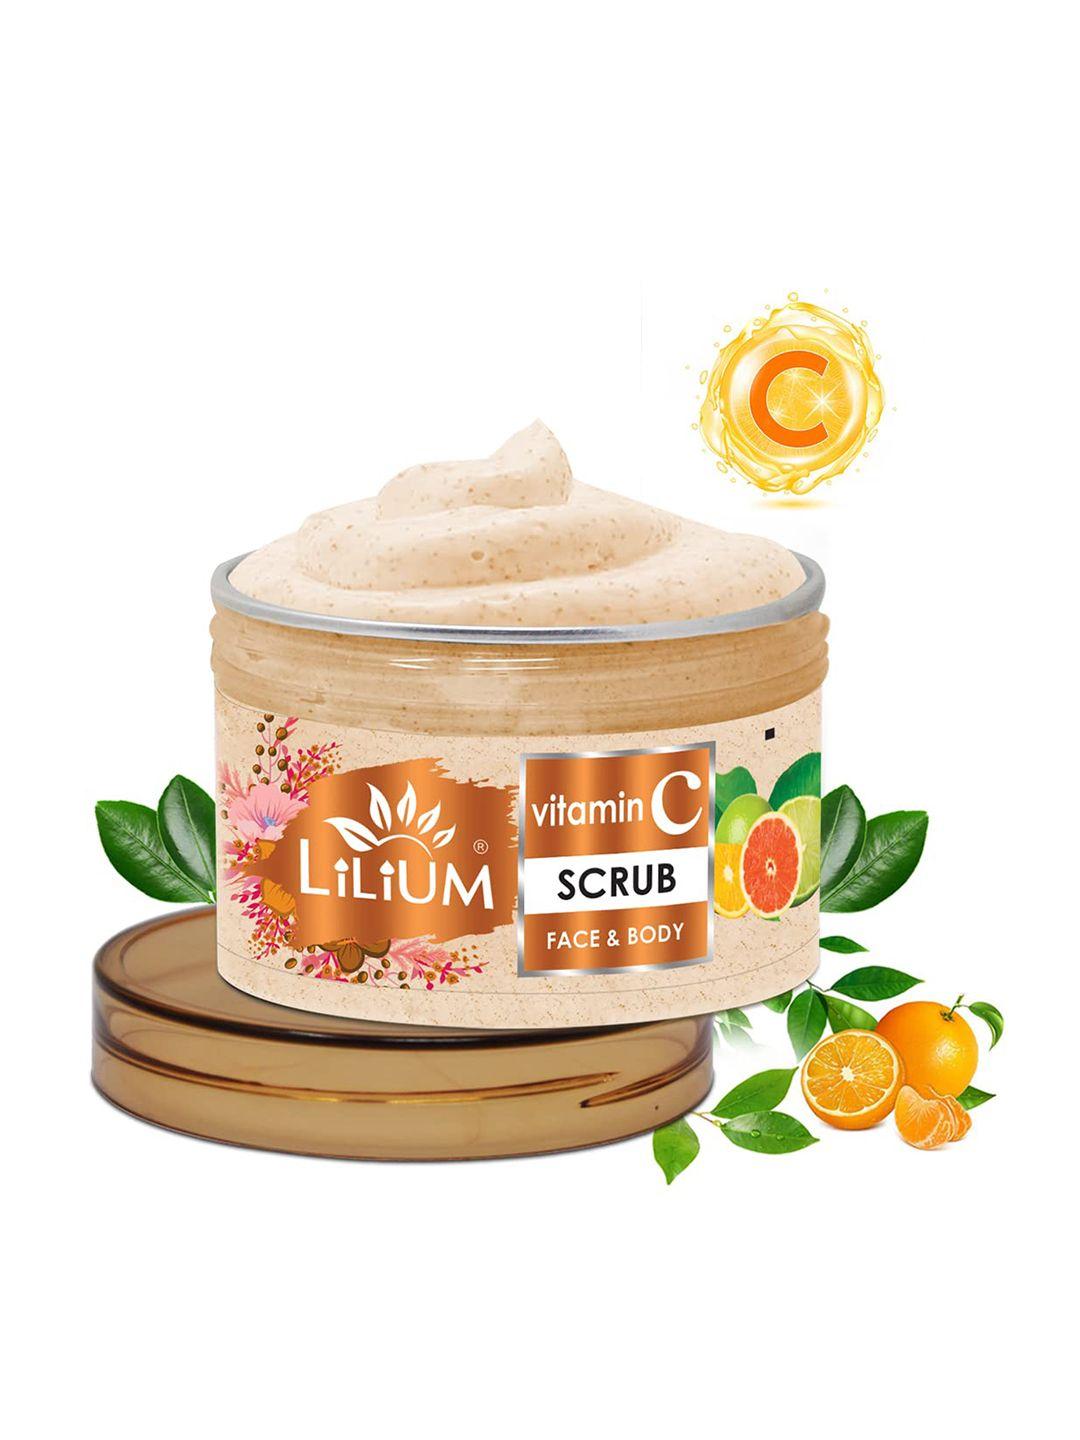 lilium vitamin c face & body scrub with orange & turmeric - 250 g